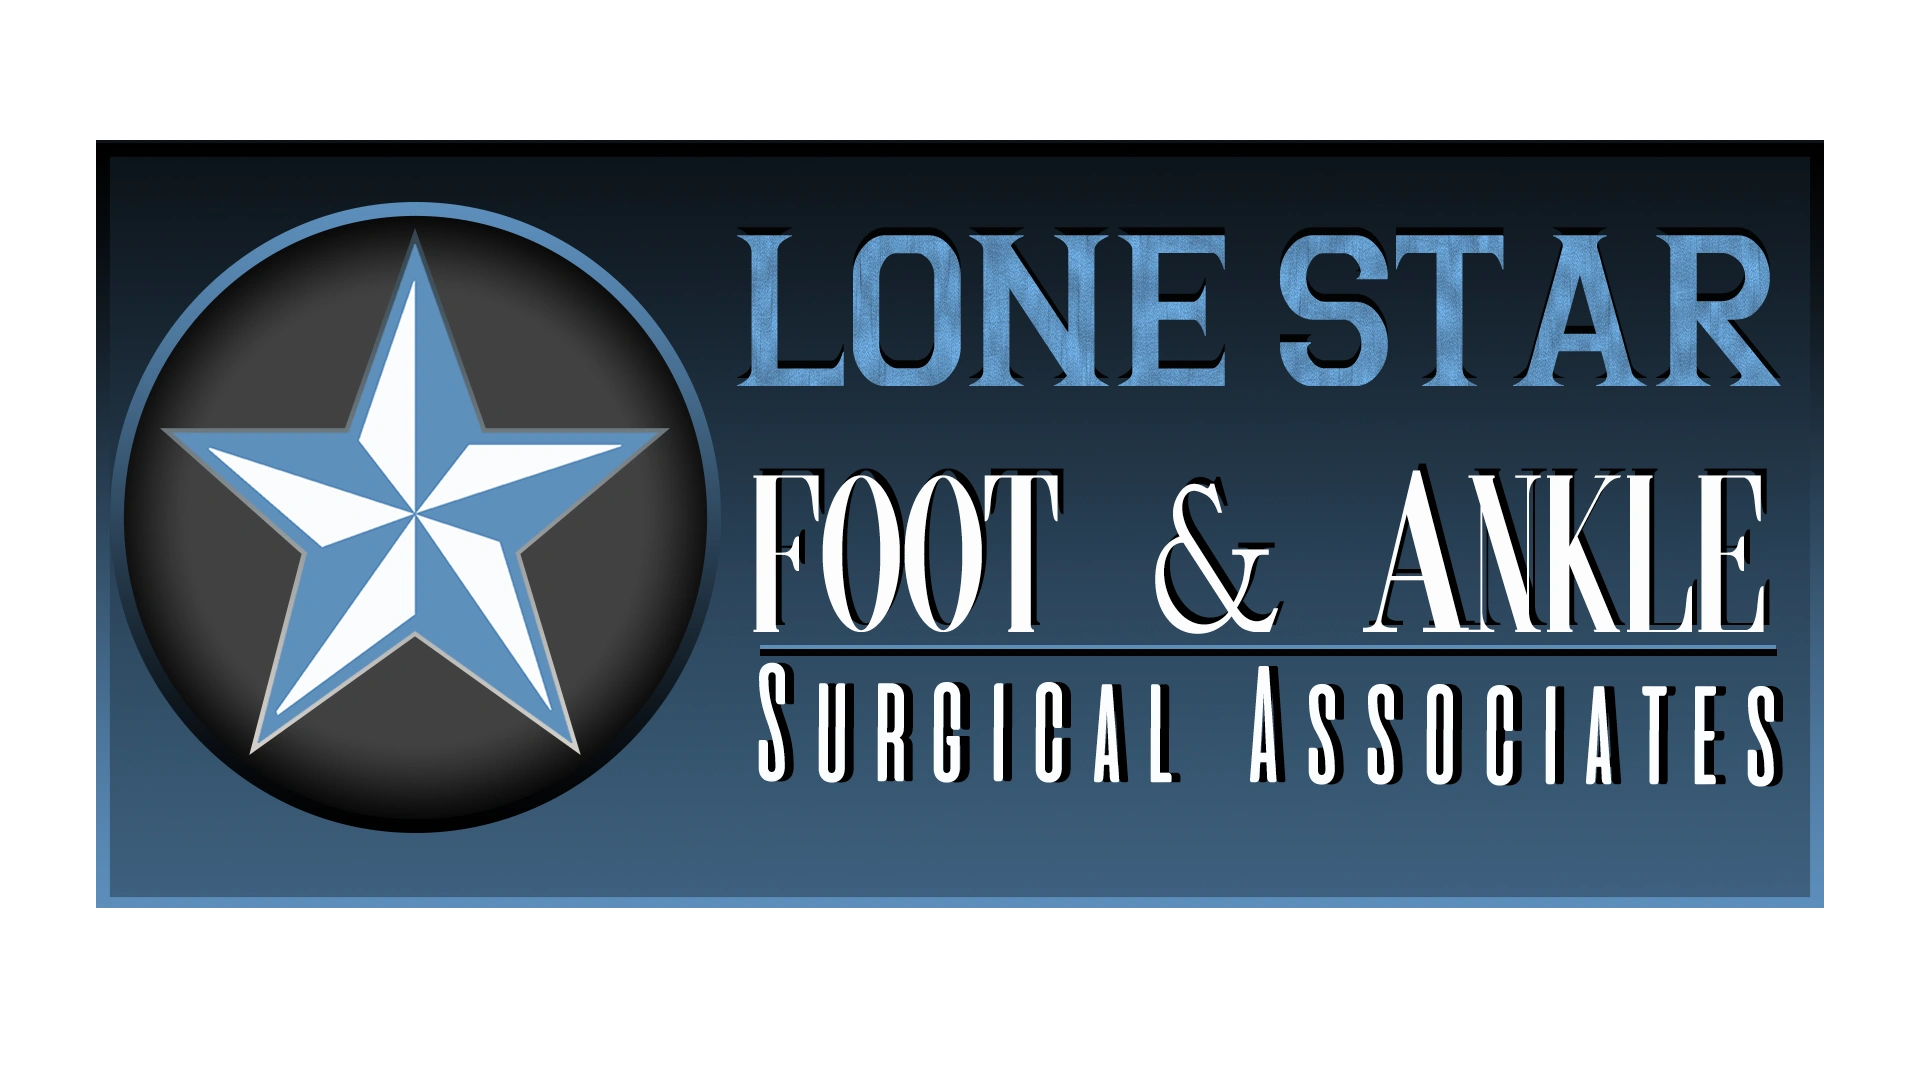 (c) Lonestarfoot-ankle.com